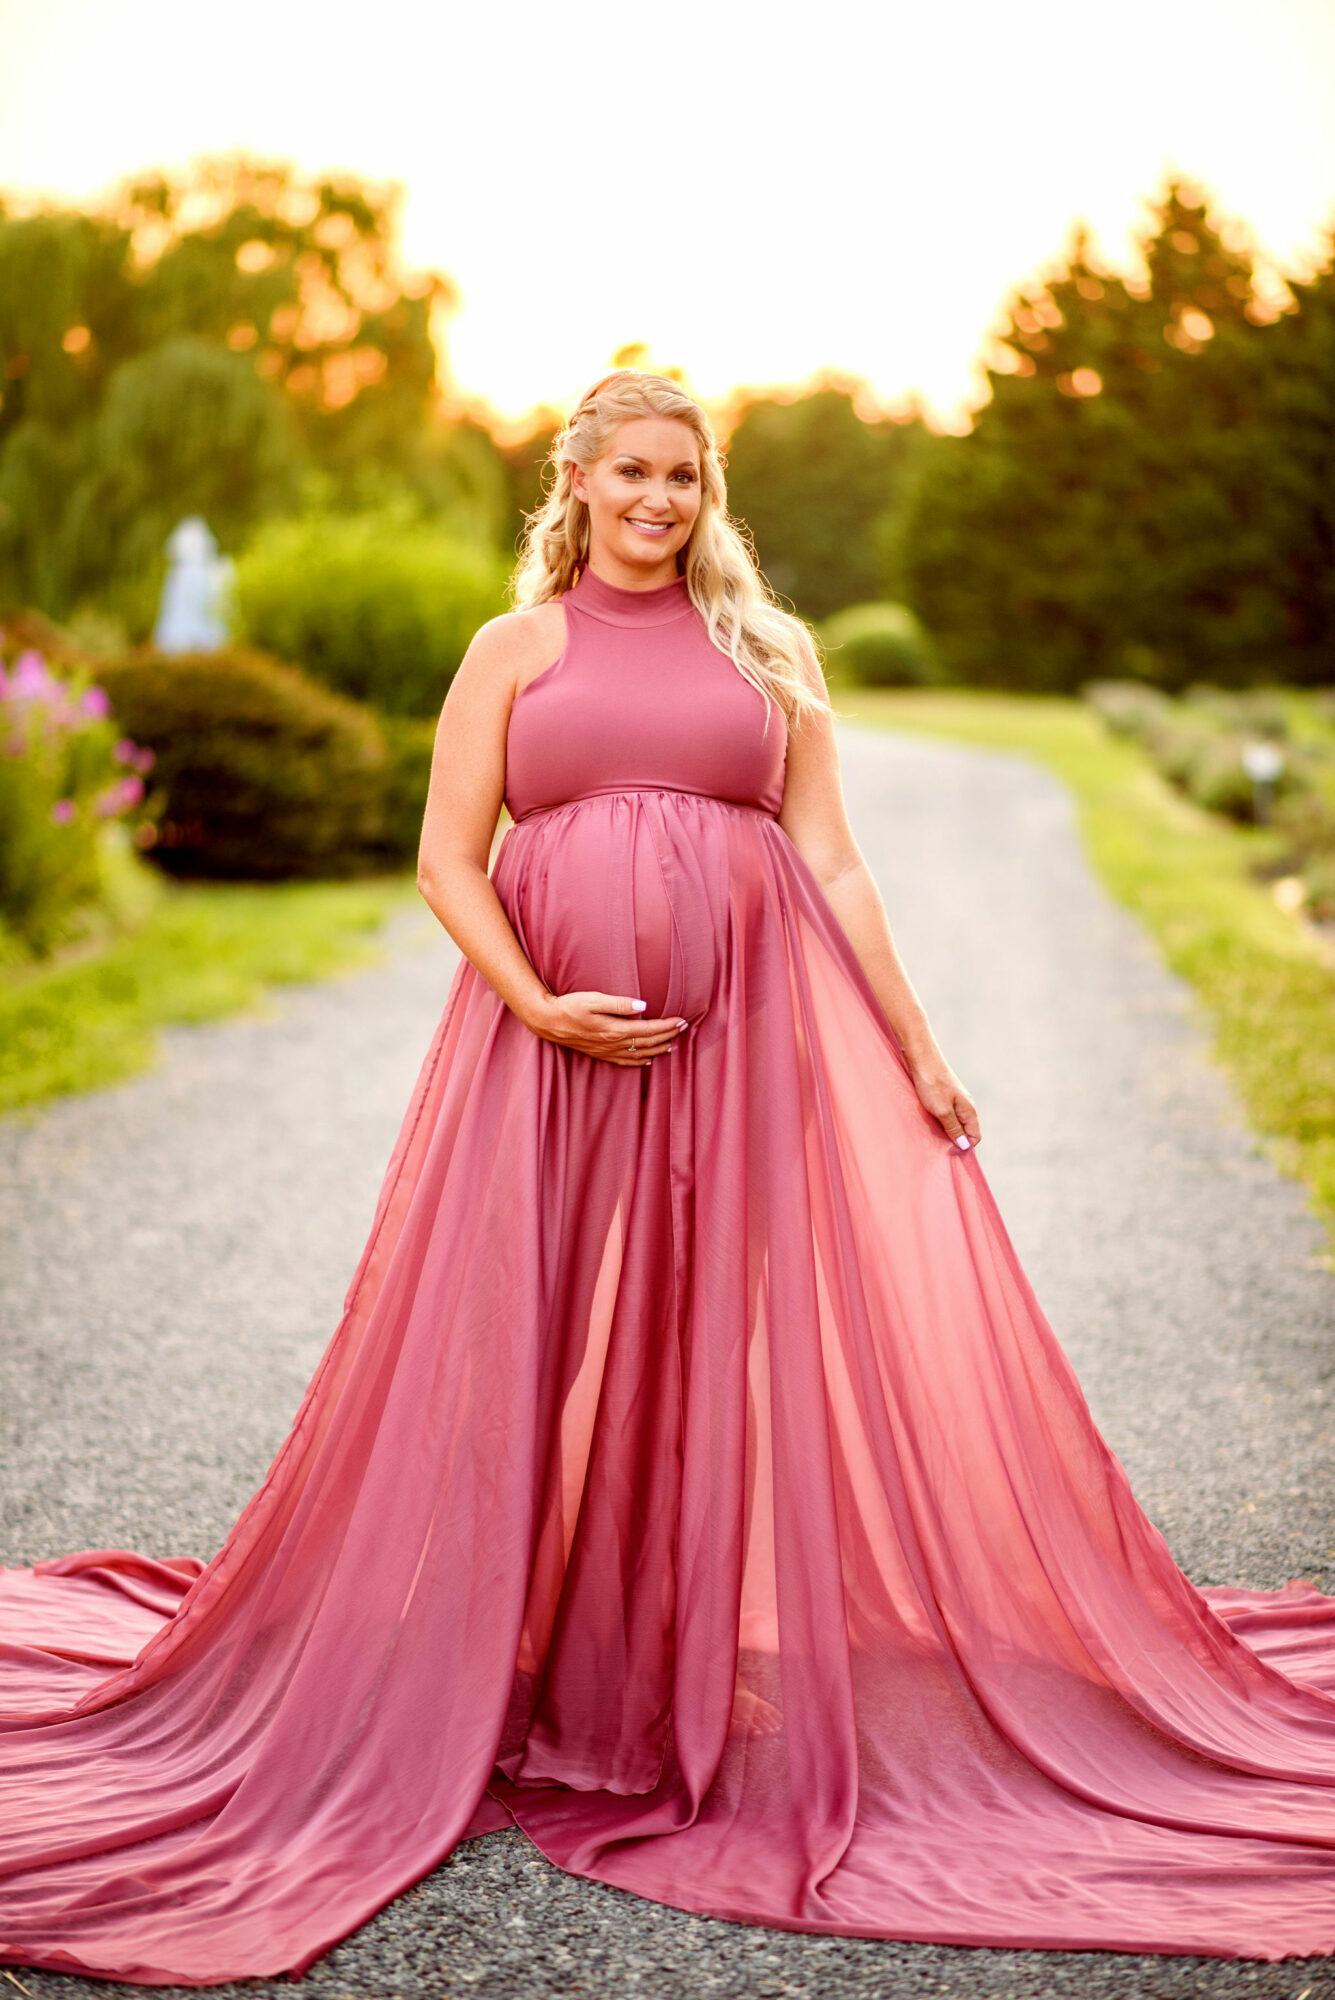 Lavender-Fields-Milton-Delaware-Pink-Maternity-Gown-Photo.jpg